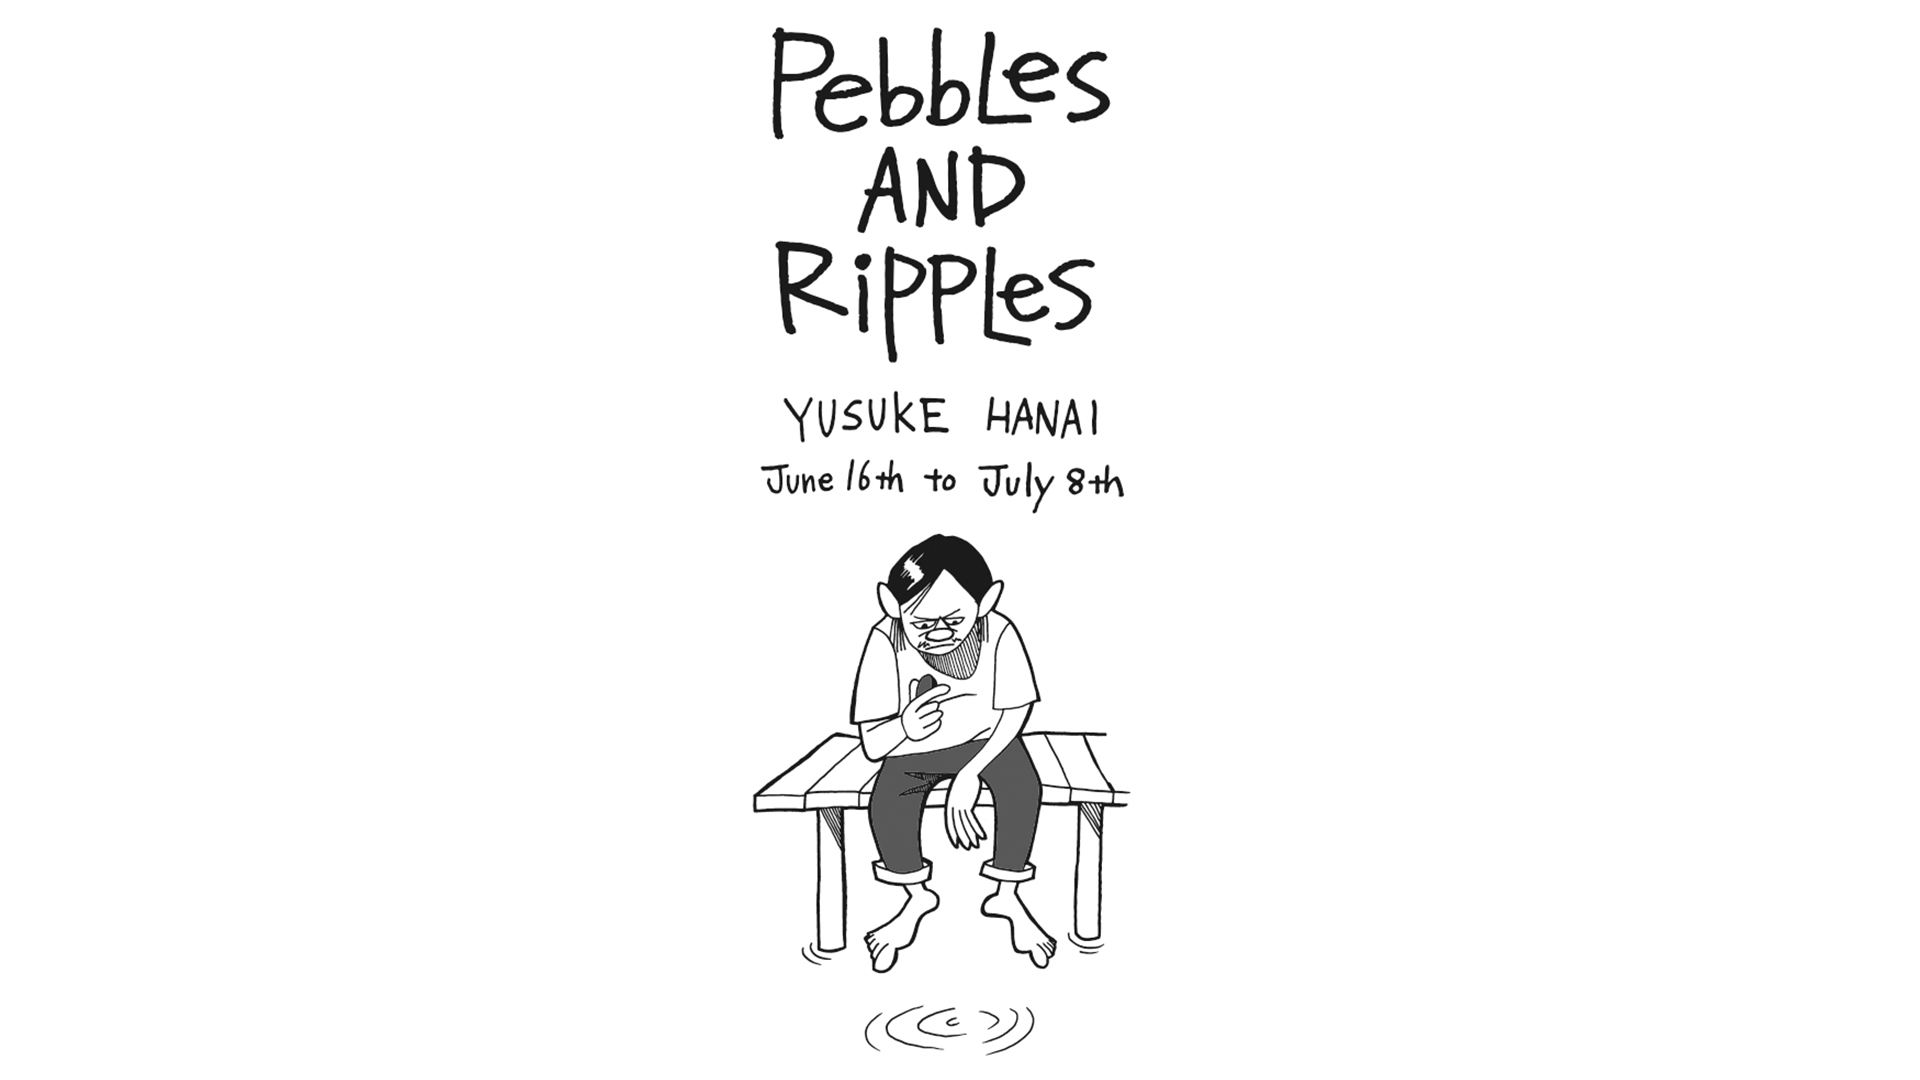 "”PebbLes AND RiPPLes”" by Yusuke Hanai